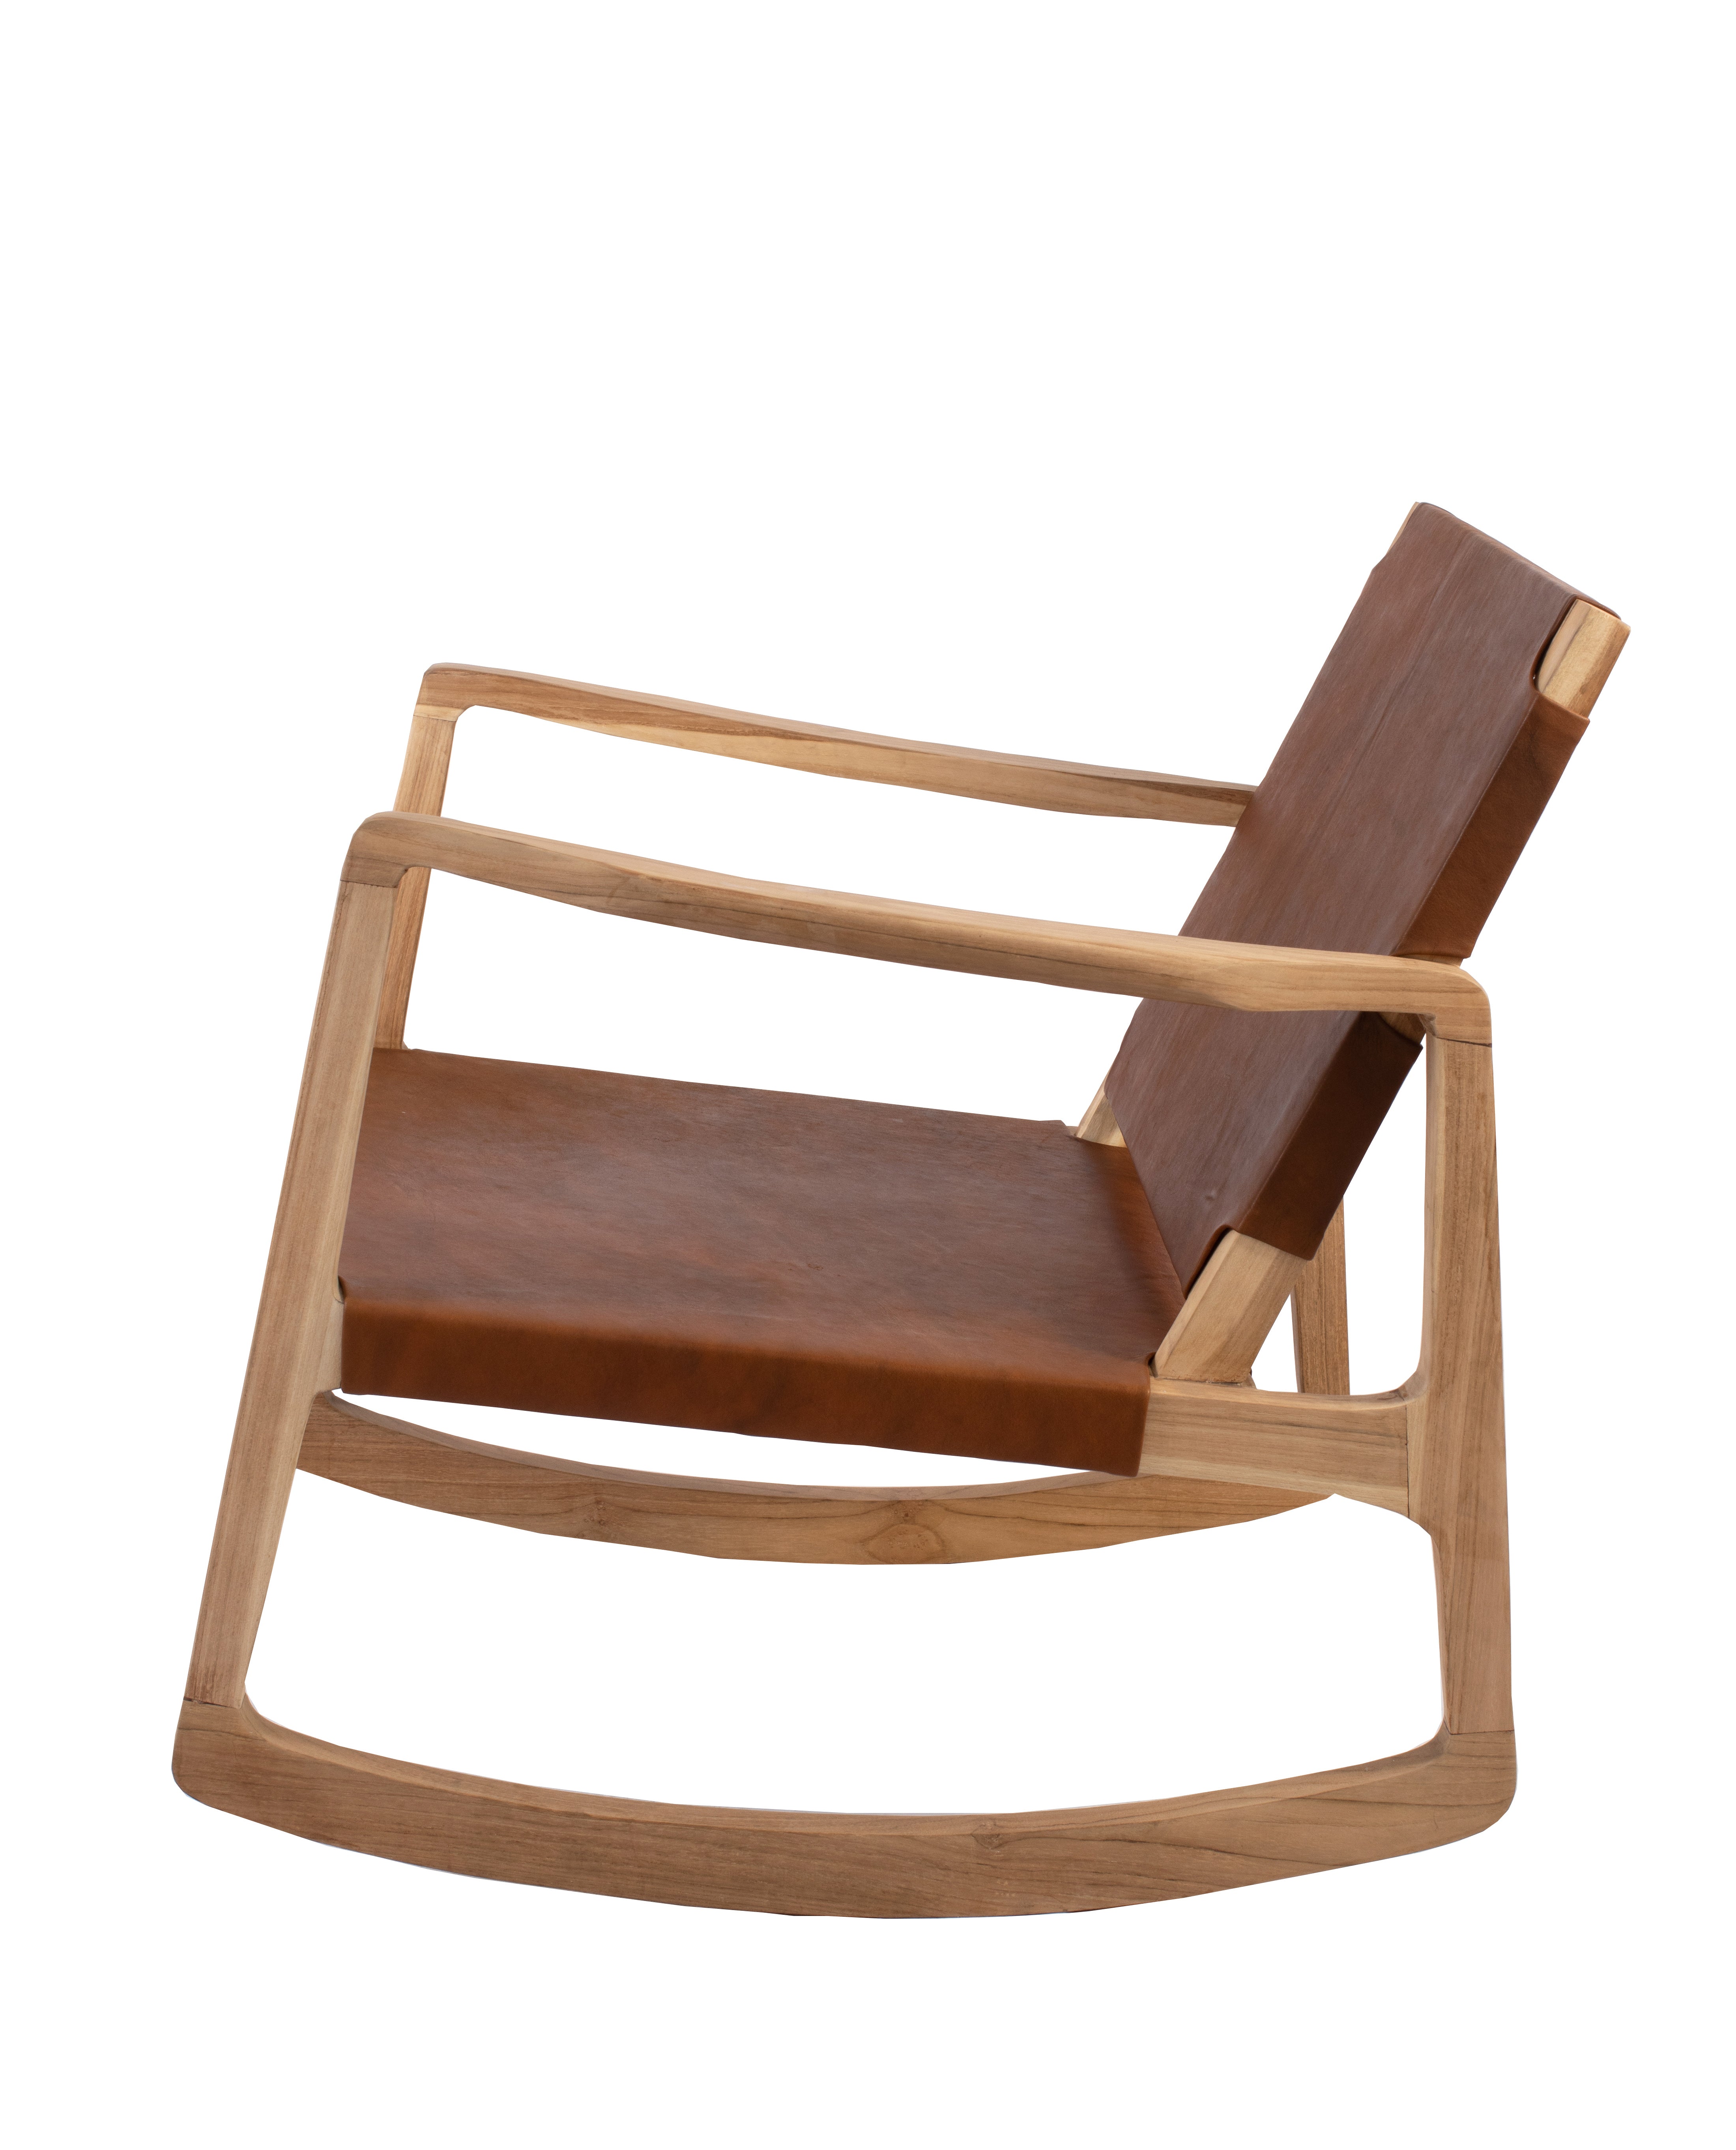 Chocolate Rocker Chair - PRE ORDER